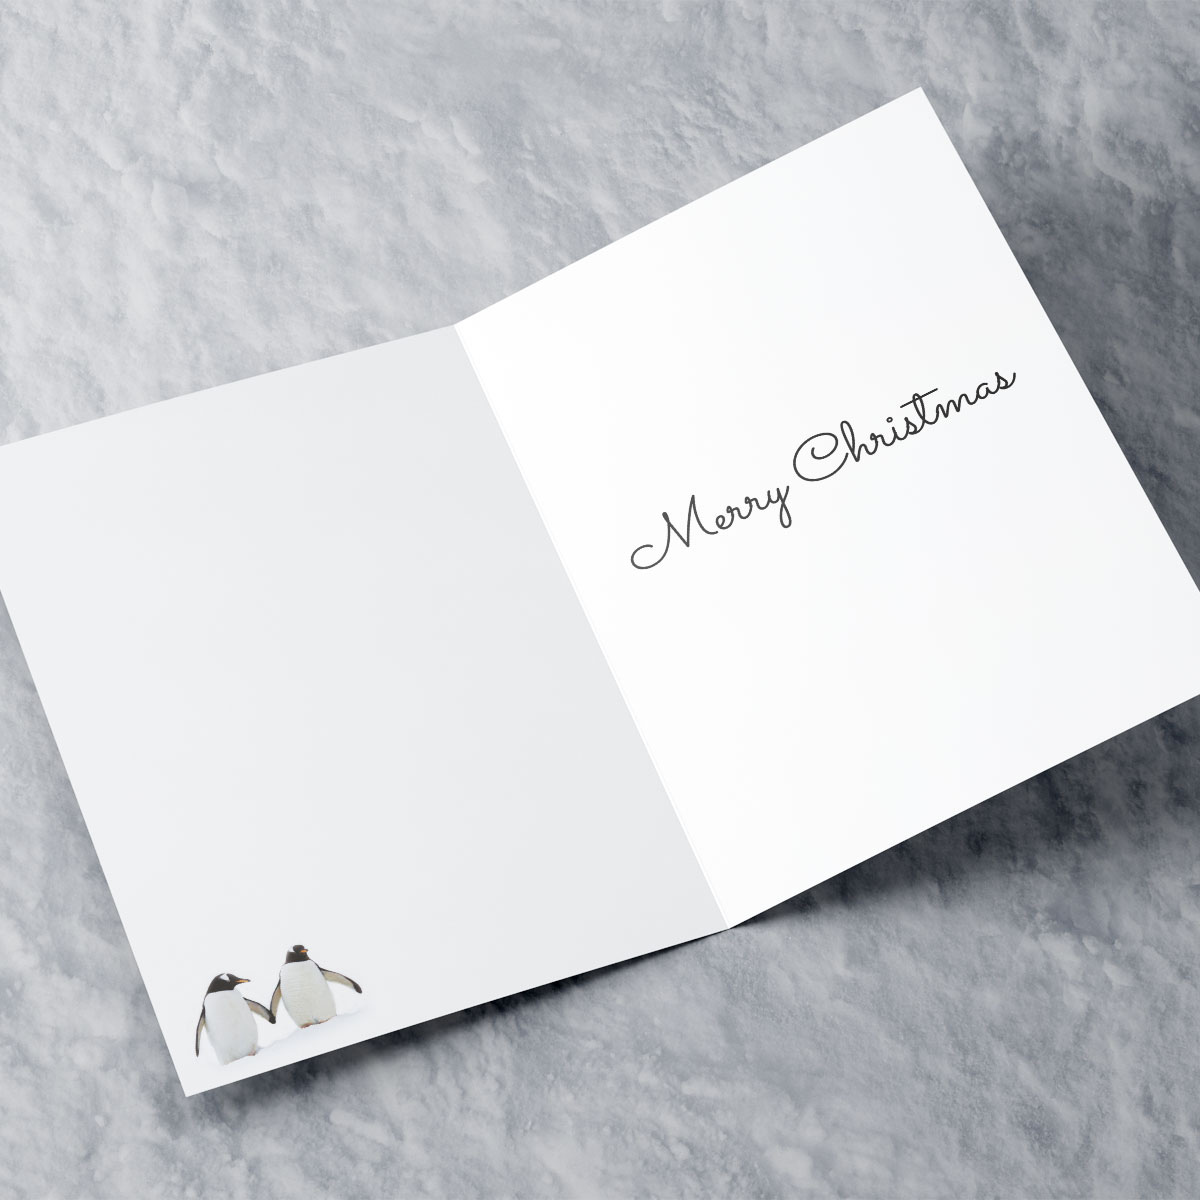 Personalised Christmas Card - Penguins Nan and Grandad